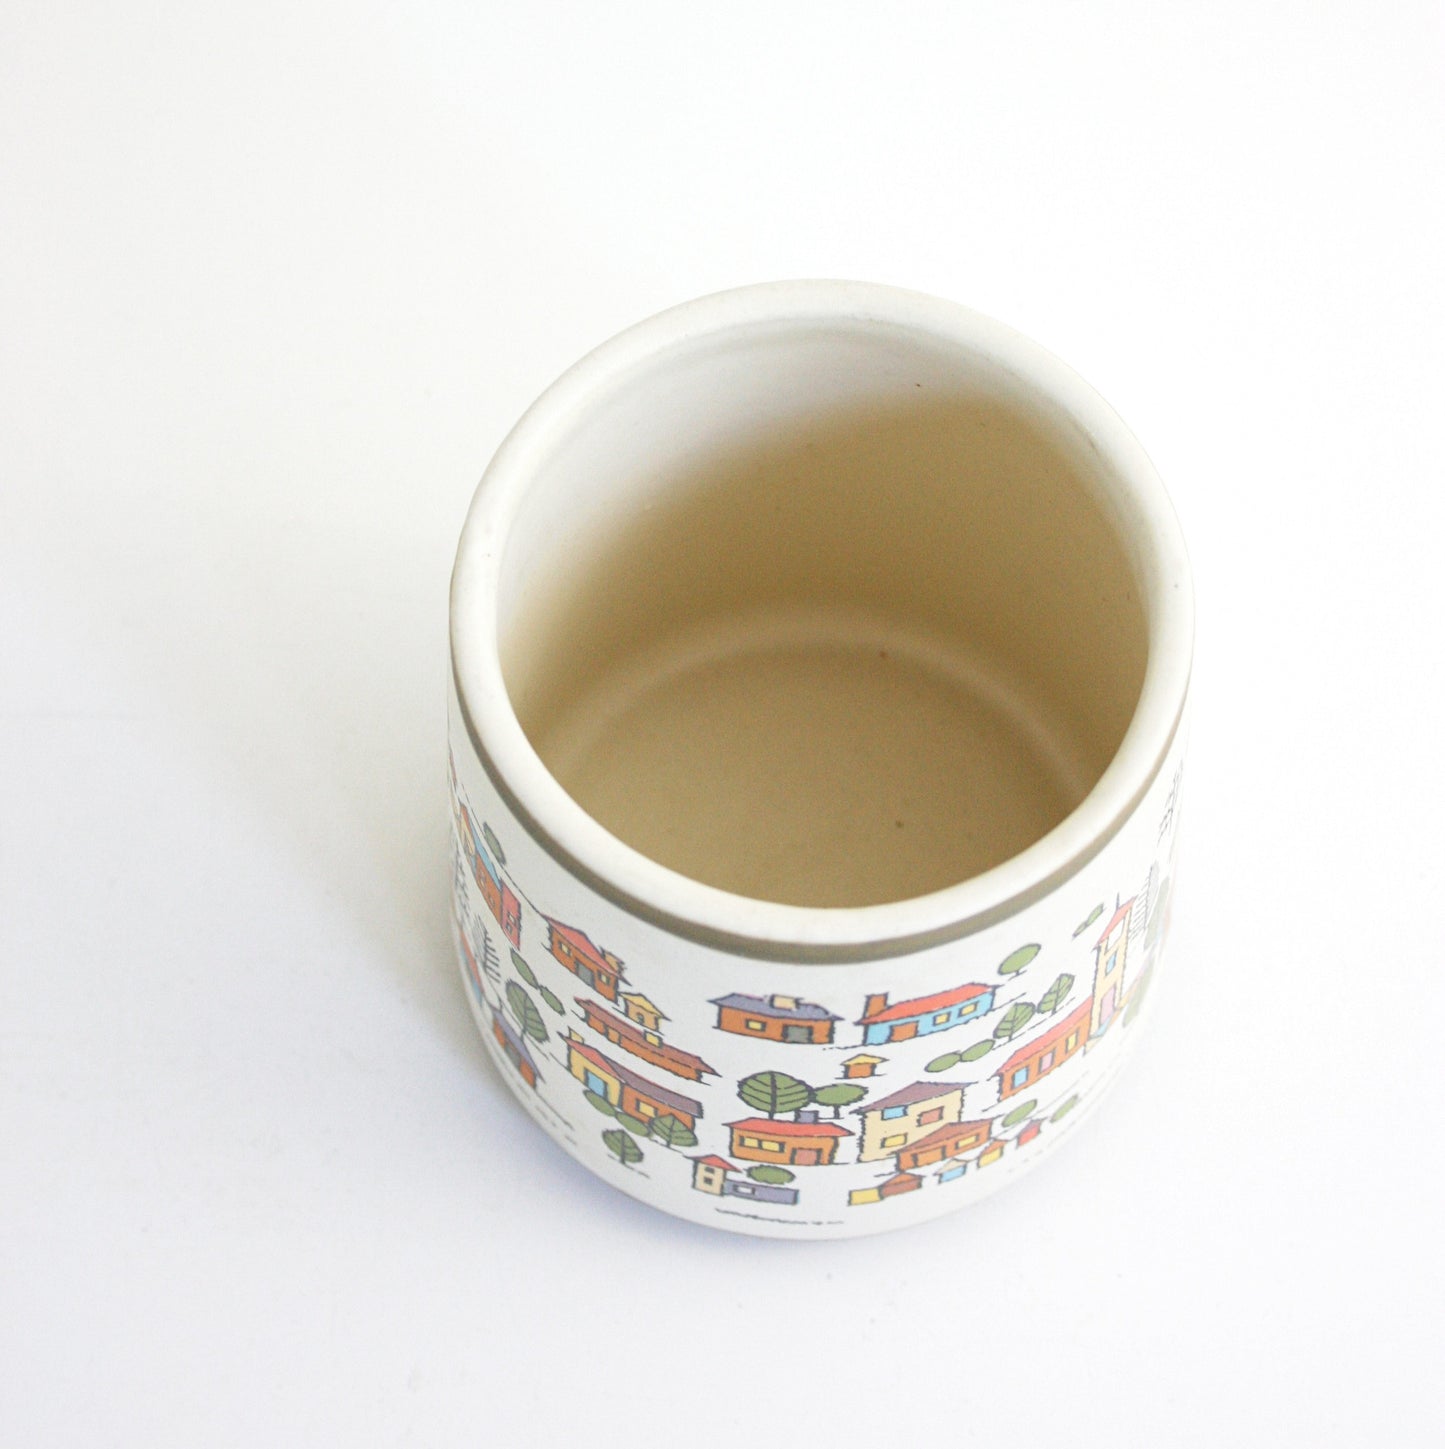 SOLD - Vintage Country Village Stoneware Planter / Vintage Houses Ceramic Jar From Japan